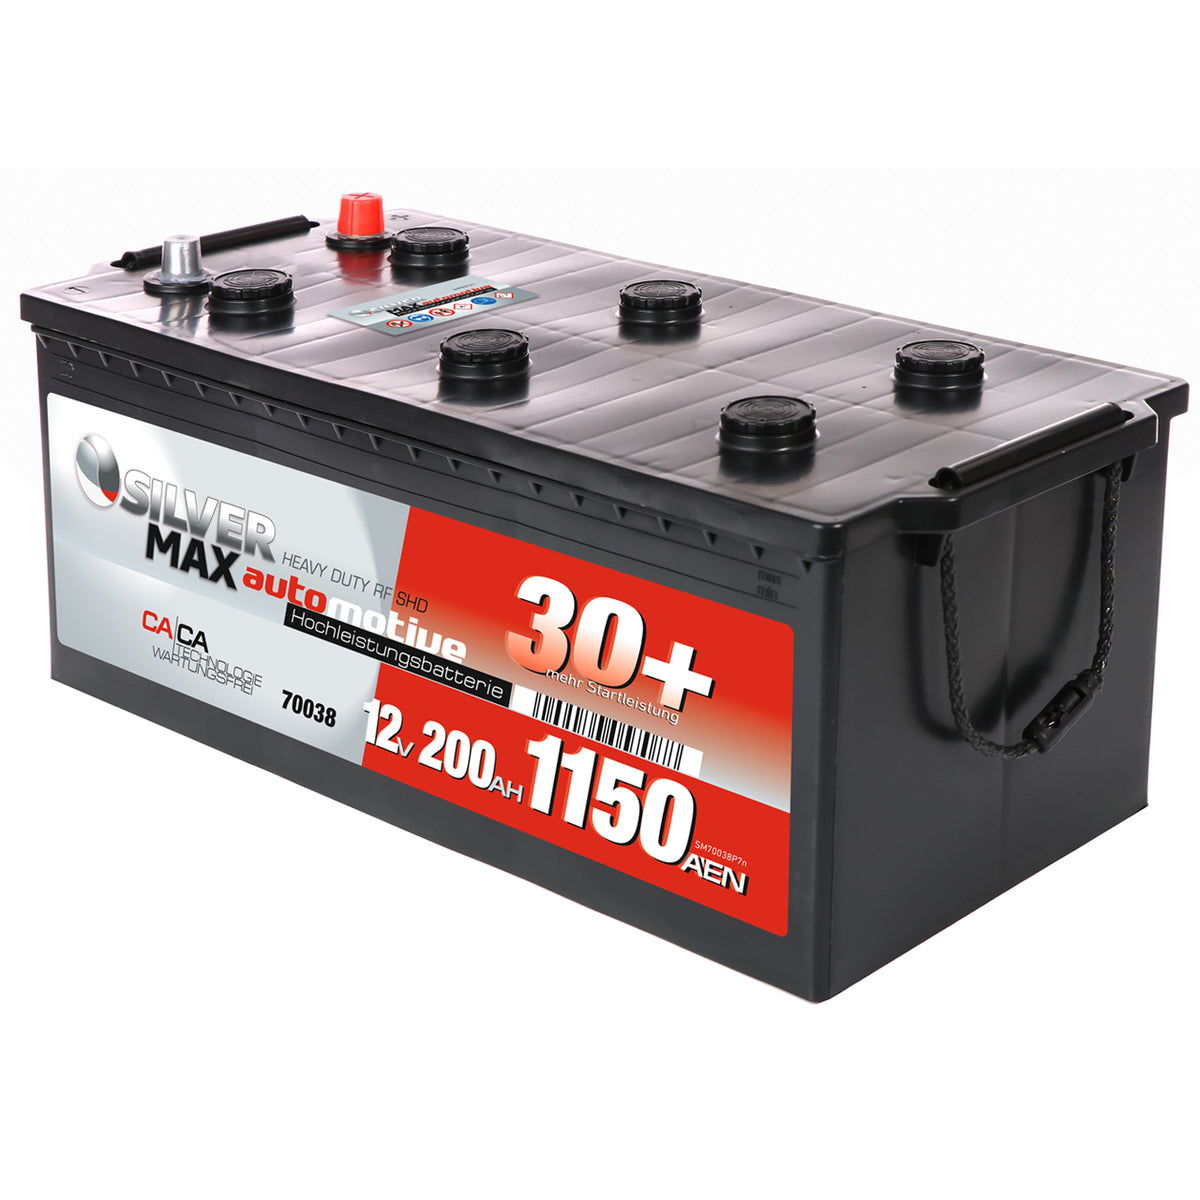 Batterie VARTA N12 ProMotive Black 200Ah 950A